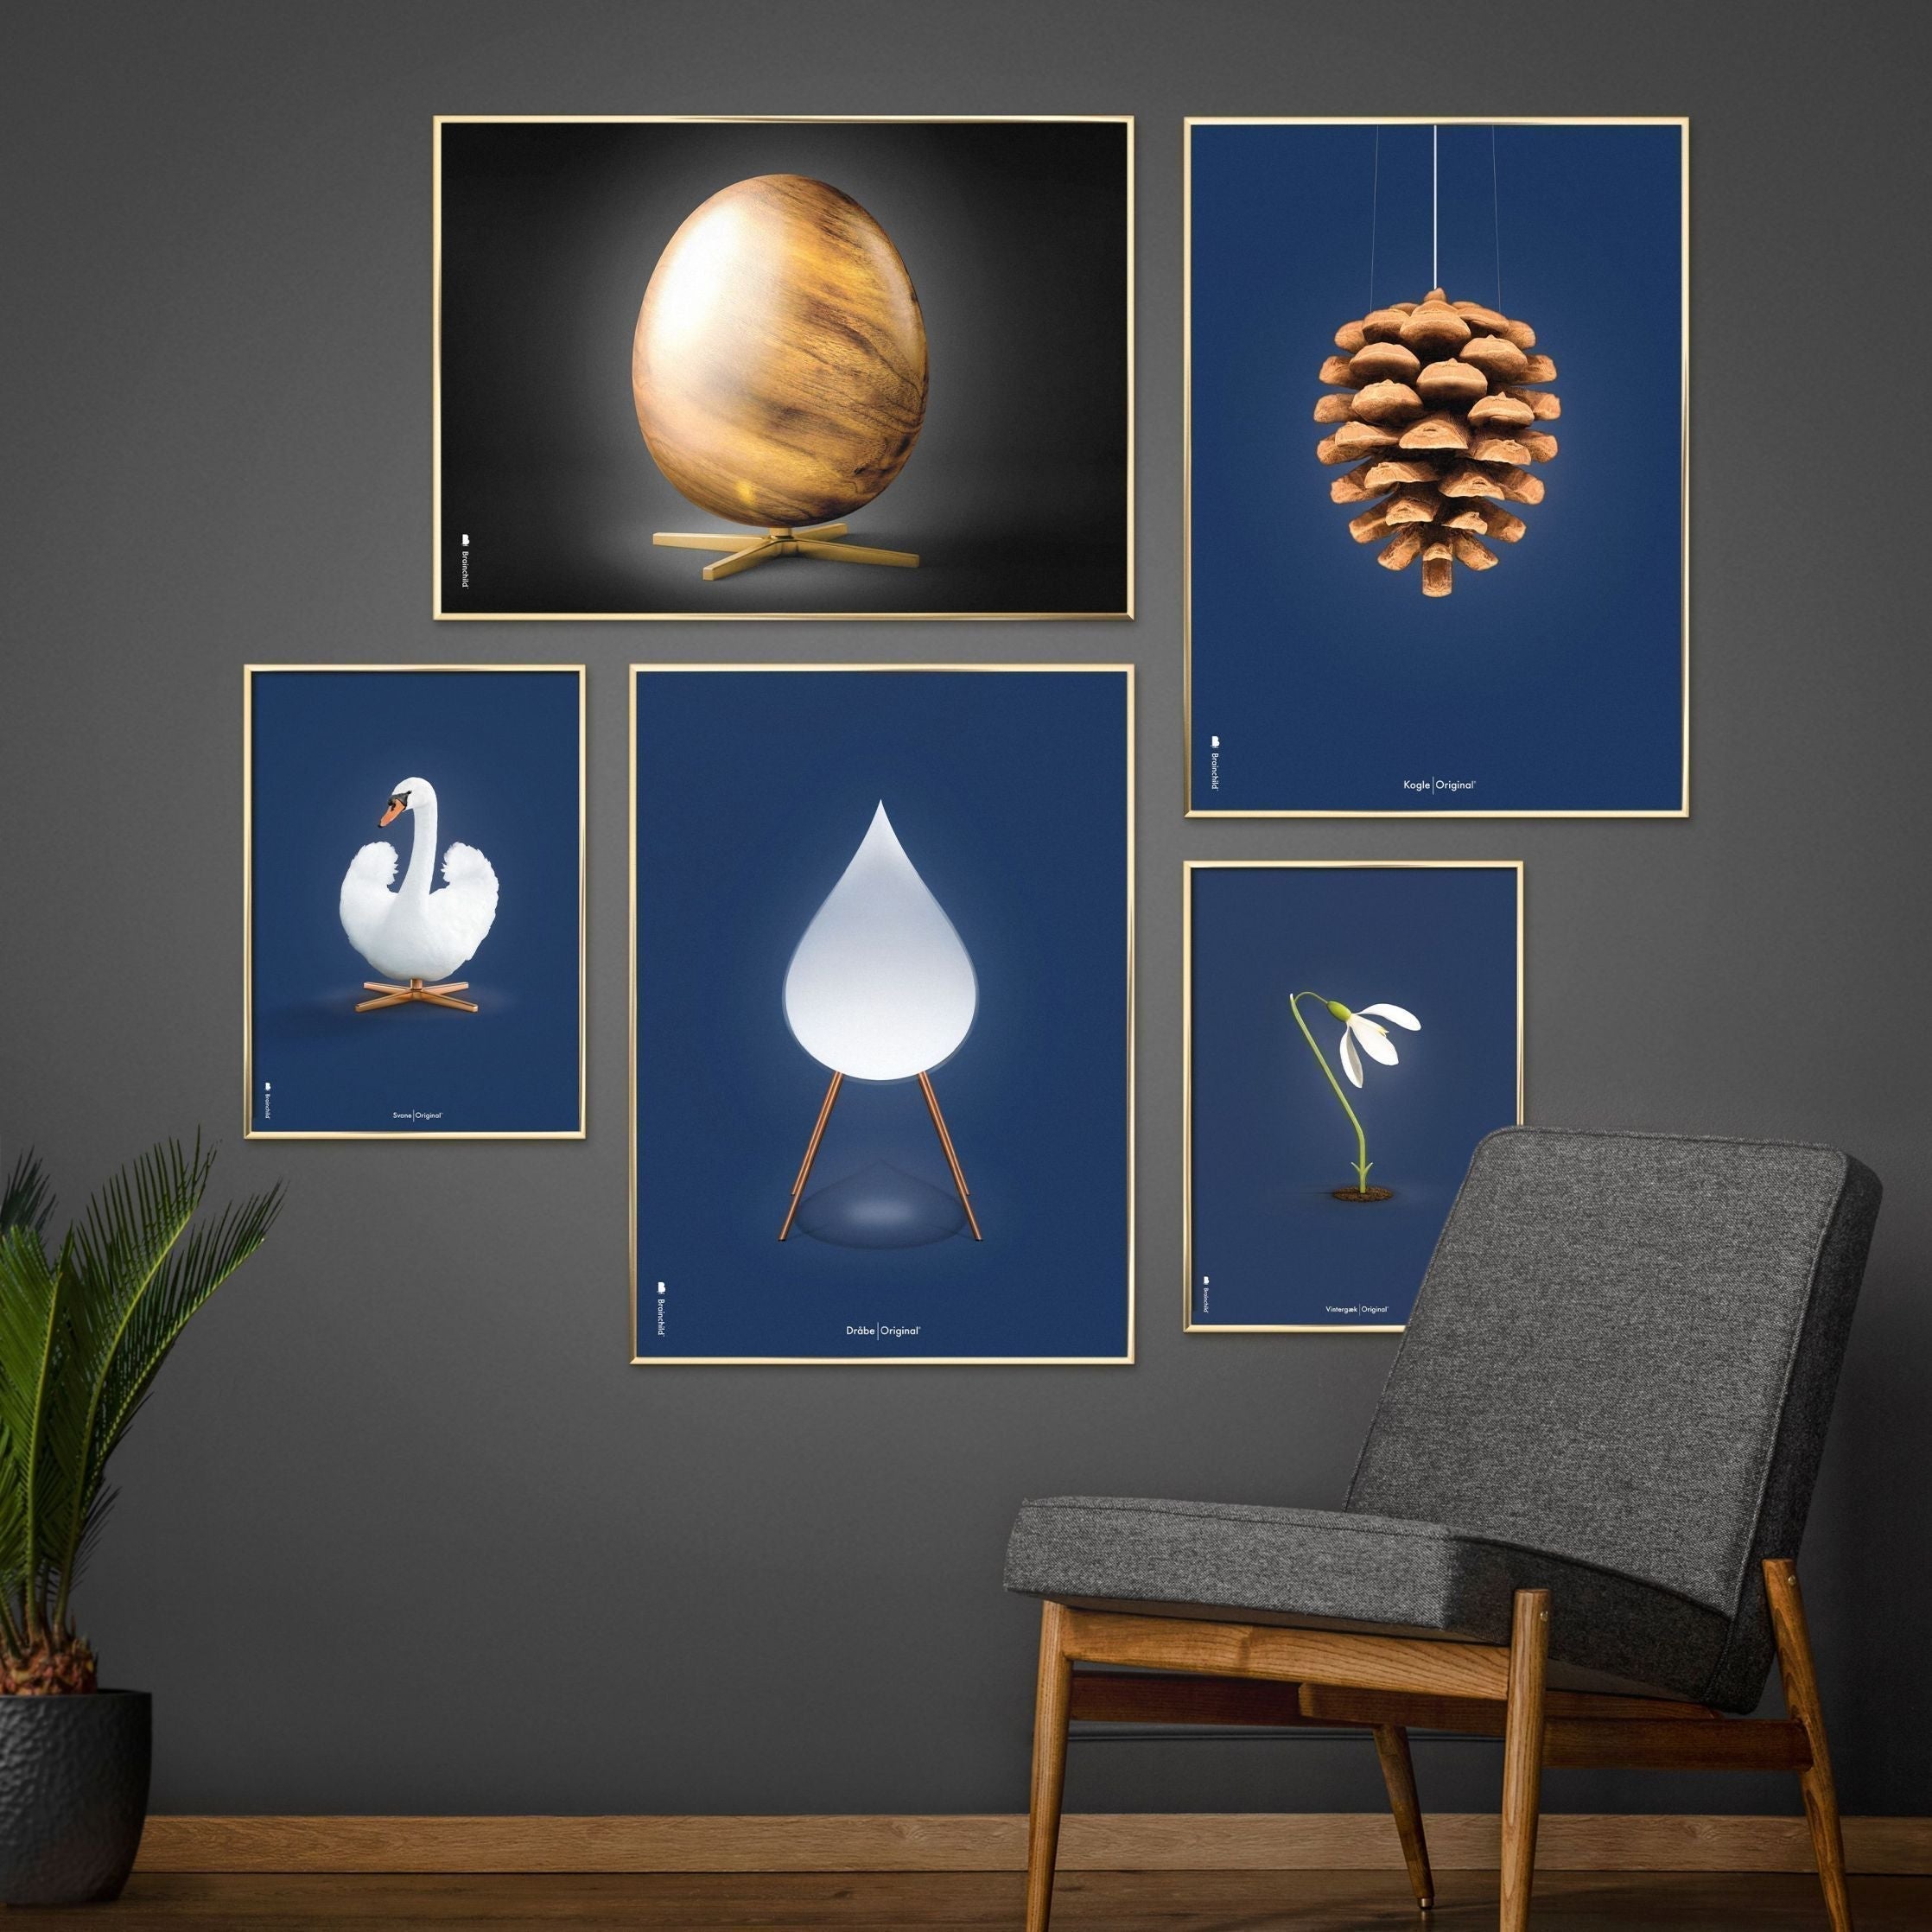 Brainchild Pine Cone Classic Poster, Frame Made Of Light Wood 70x100 Cm, Dark Blue Background